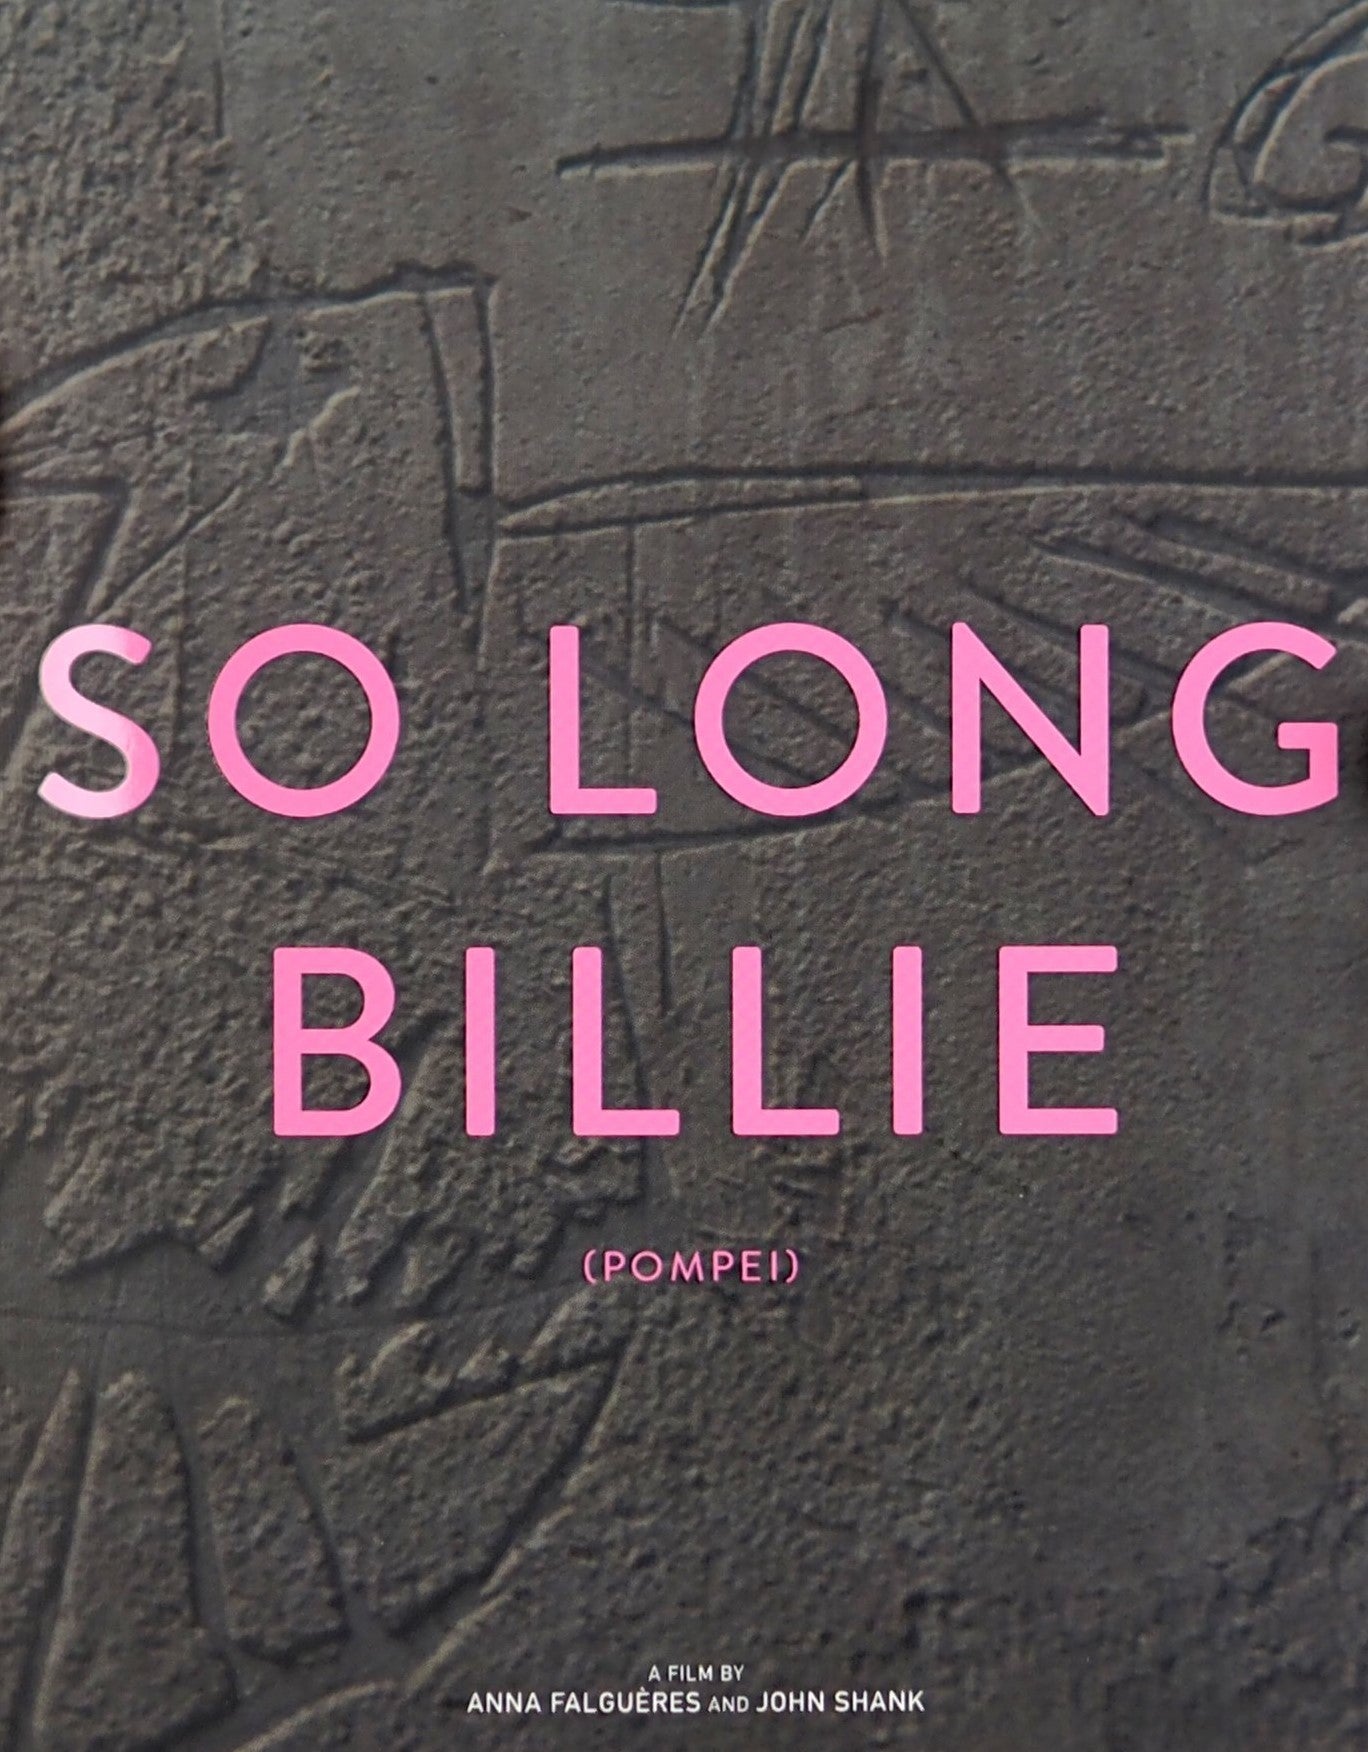 So Long Billie (Limited Edition) Blu-Ray Blu-Ray